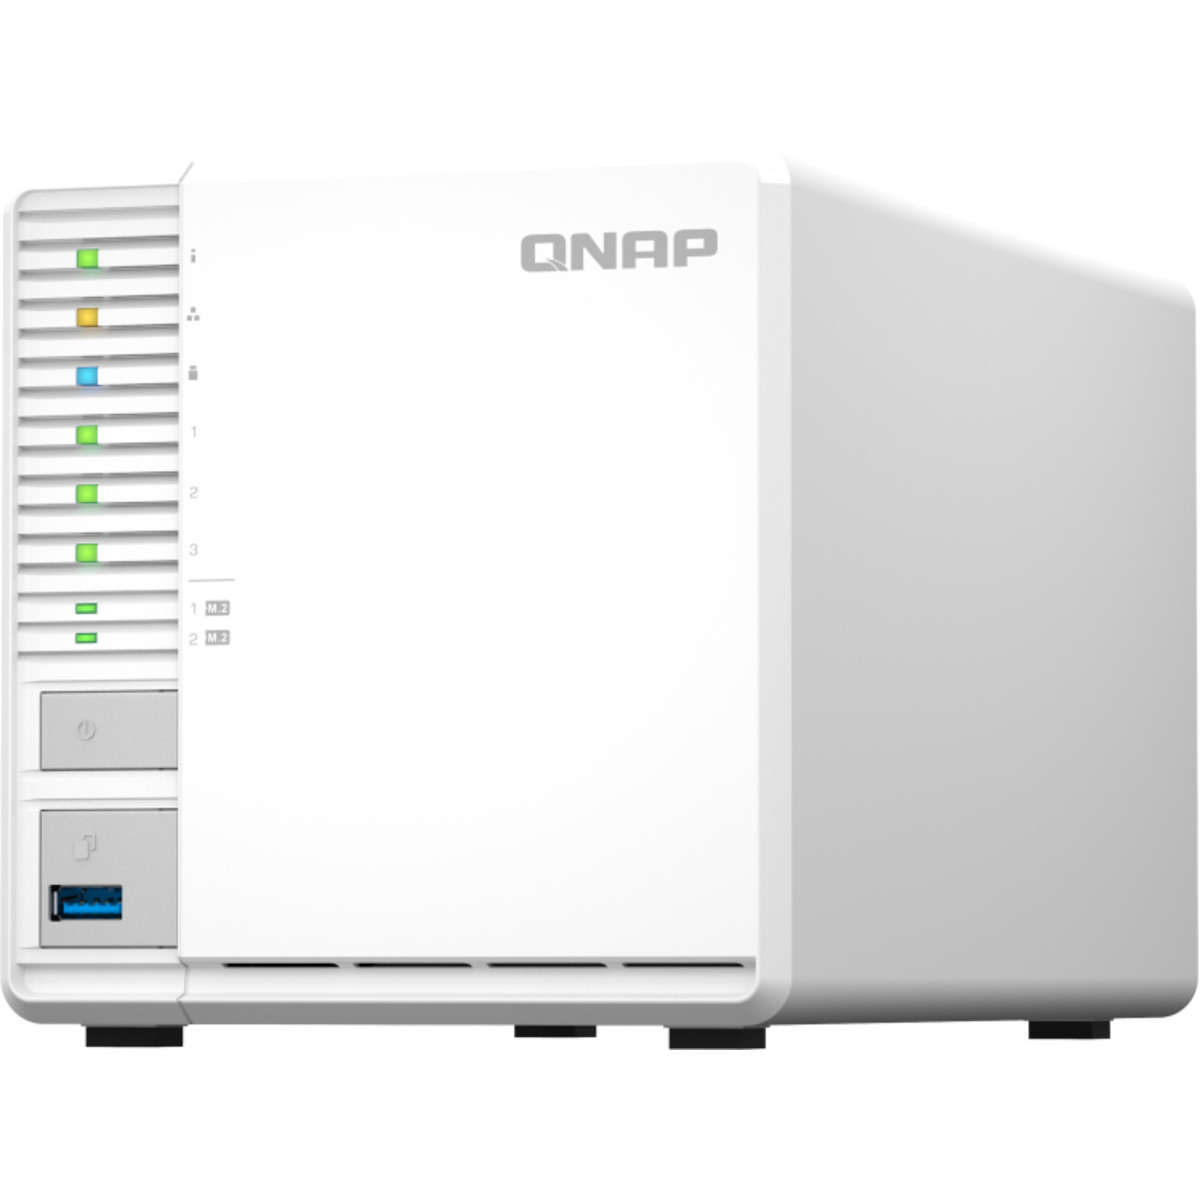 QNAP TS-364 36tb 3-Bay Desktop Multimedia / Power User / Business NAS - Network Attached Storage Device 2x18tb Western Digital Gold WD181KRYZ 3.5 7200rpm SATA 6Gb/s HDD ENTERPRISE Class Drives Installed - Burn-In Tested TS-364